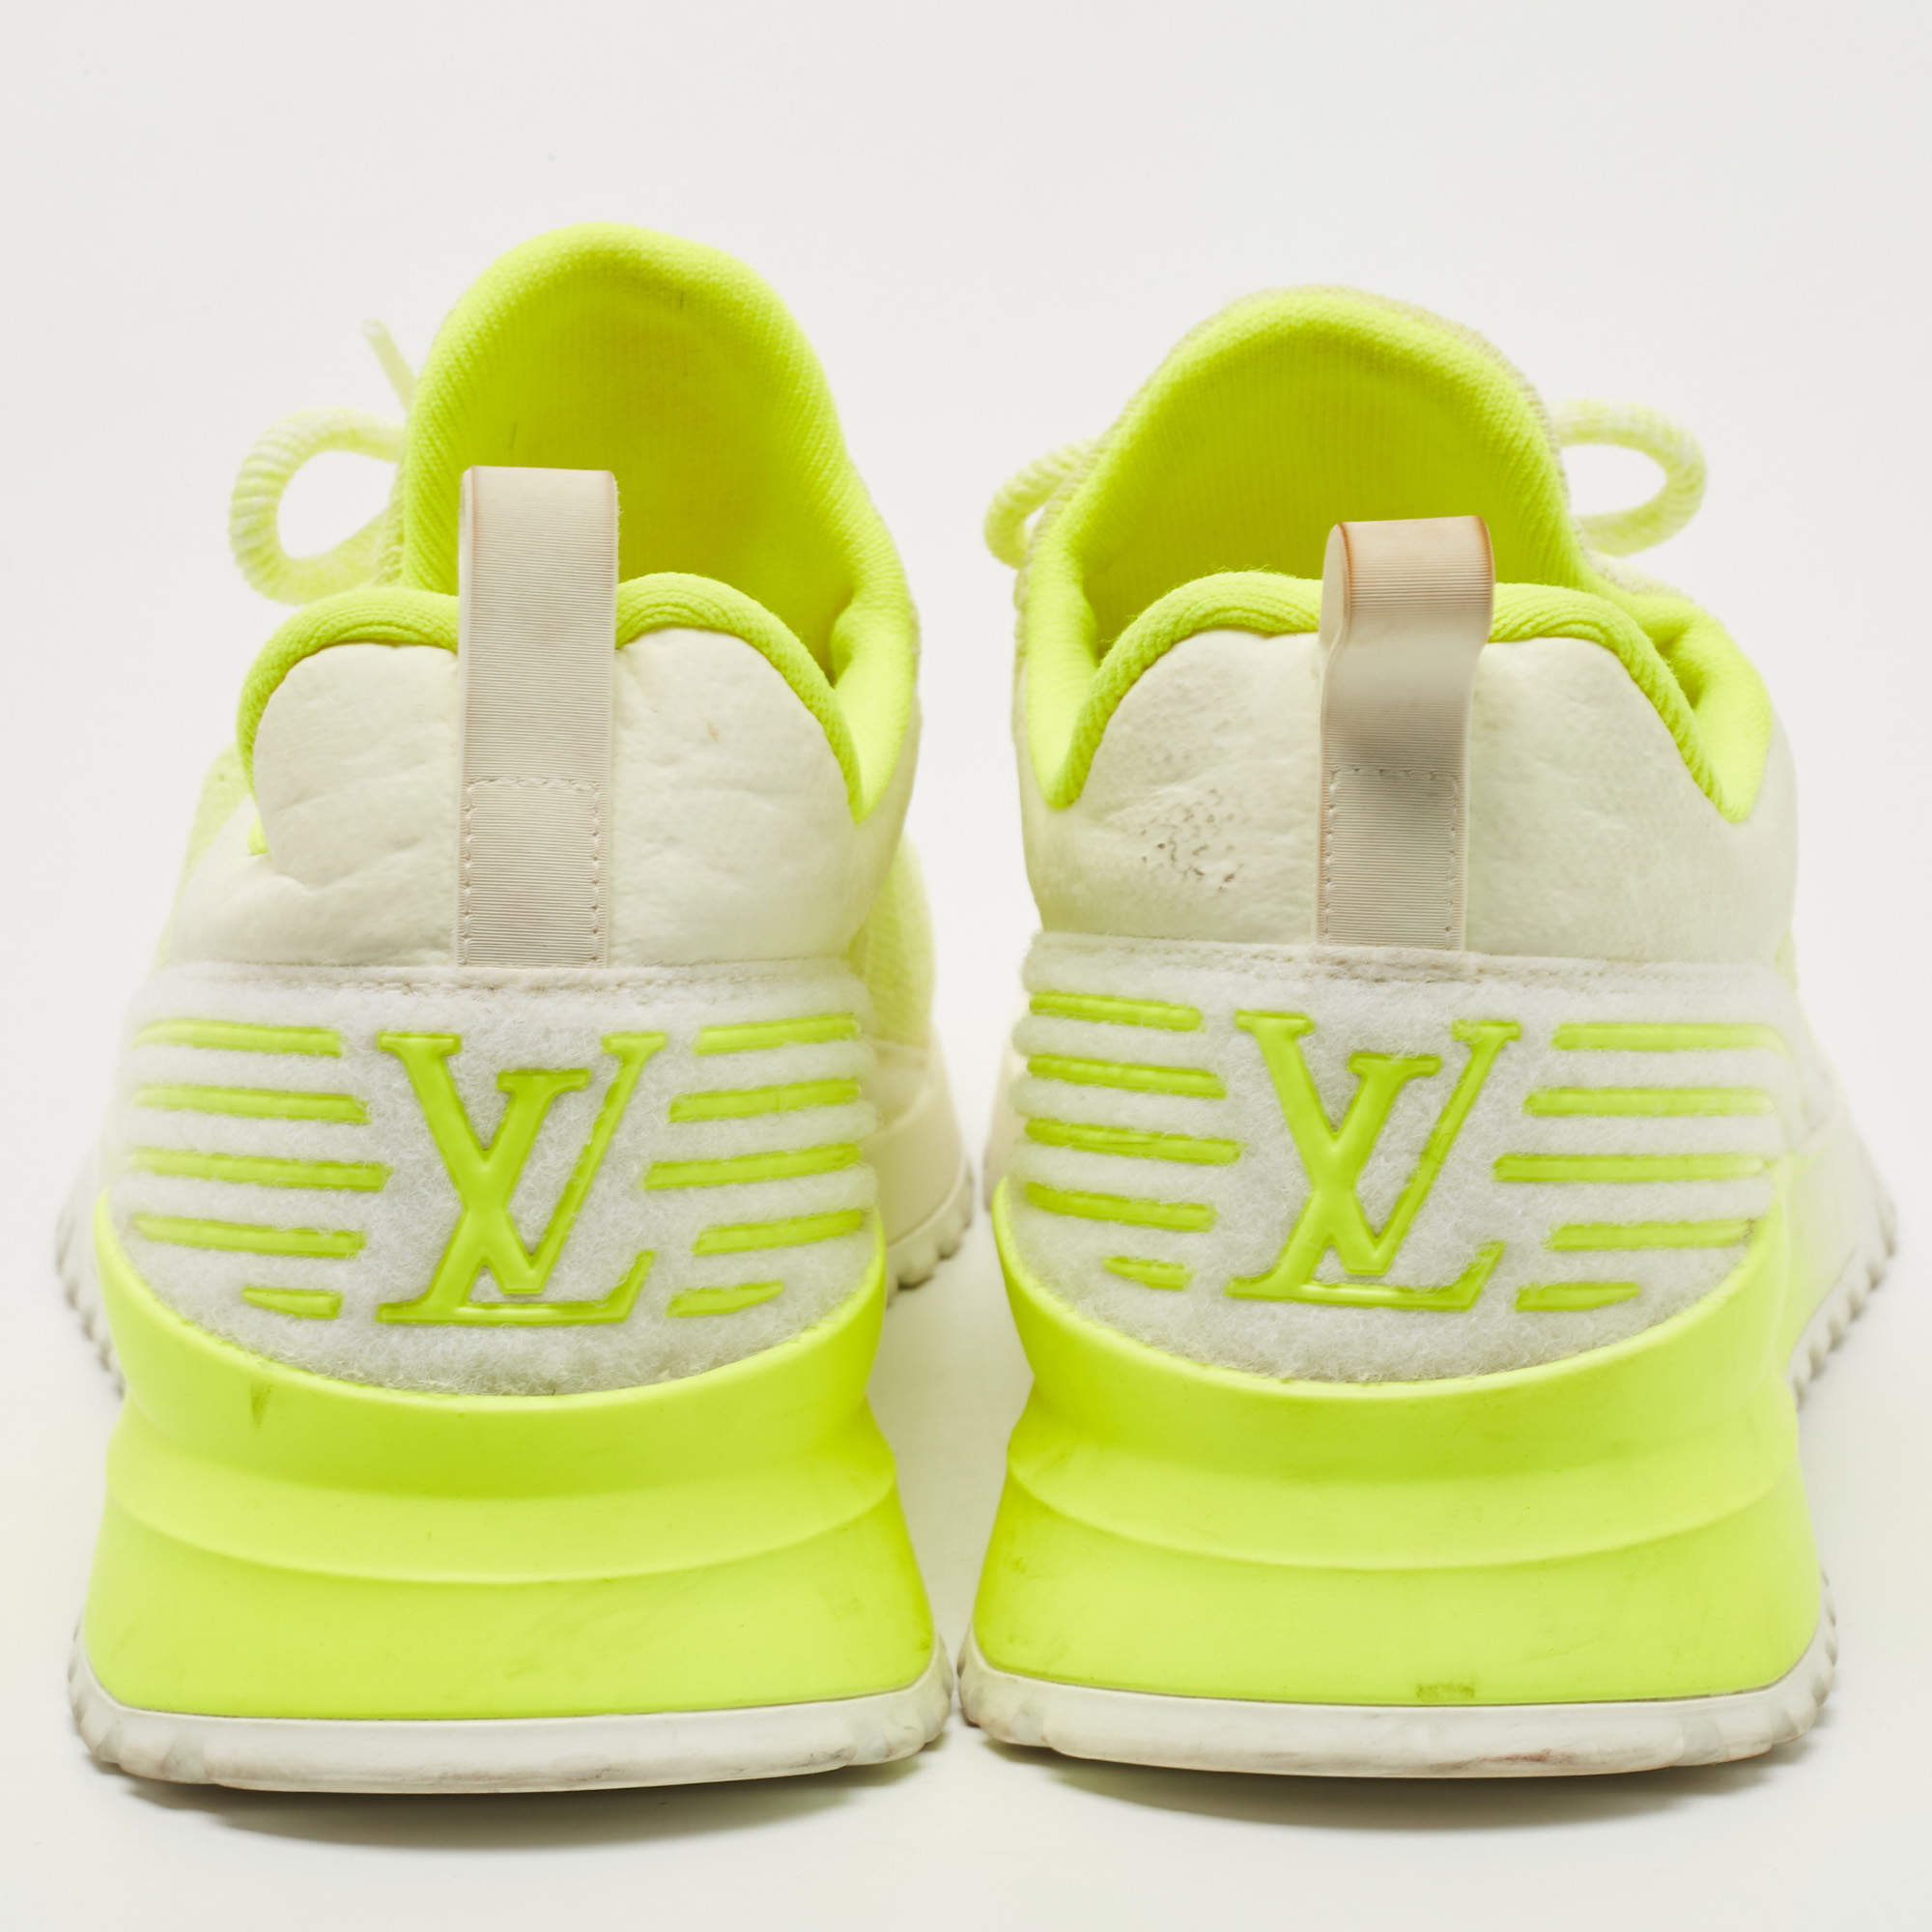 Louis Vuitton Neon Yellow Knit Fabric V.N.R Sneakers Size 42.5 Louis Vuitton